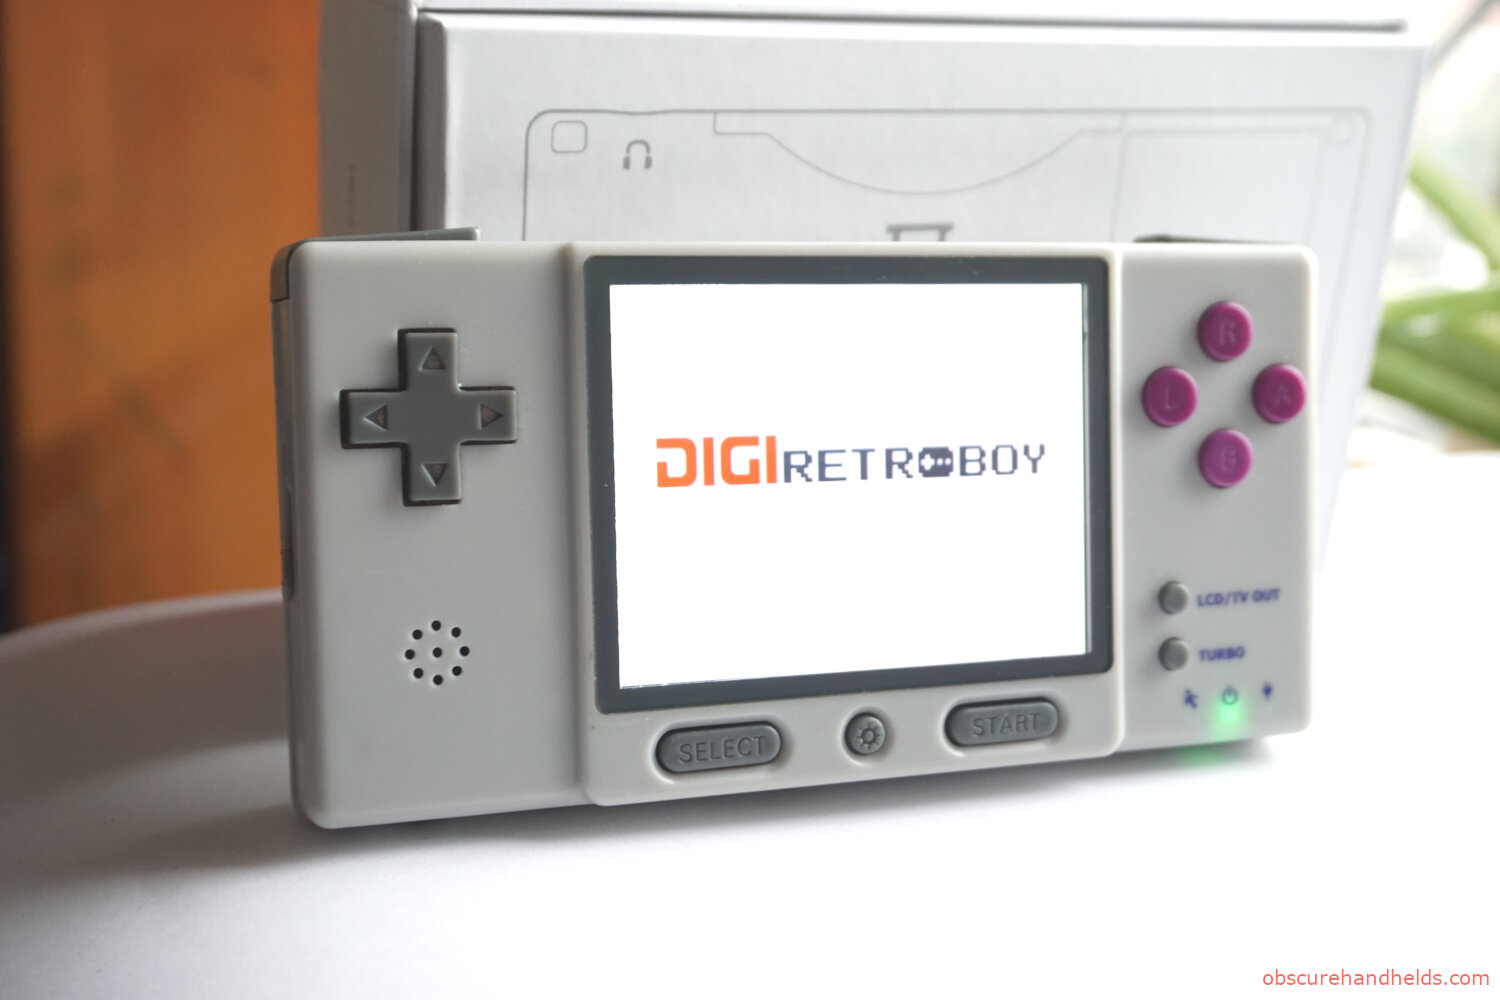 The Nintendo Game Boy Advance Clone